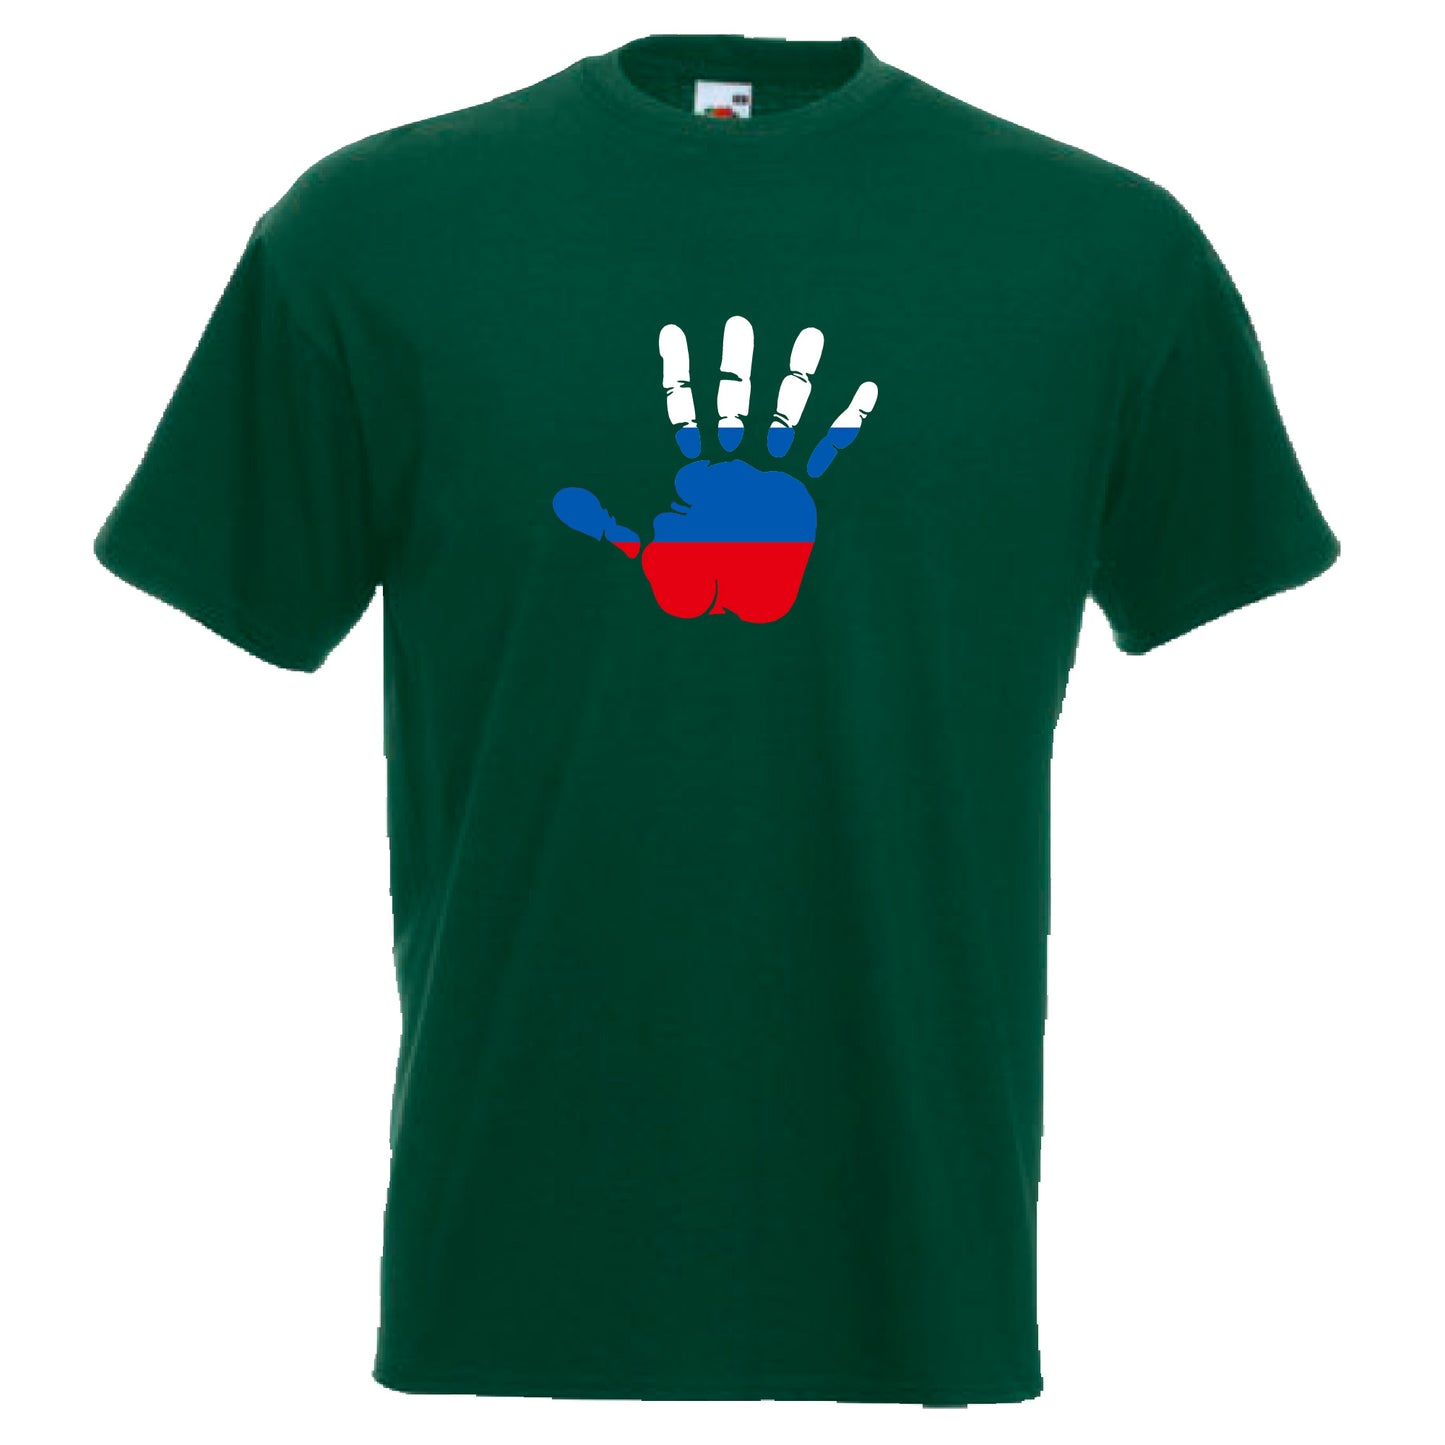 INDIGOS UG - T-Shirt Herren - Russland - Hand - Fussball